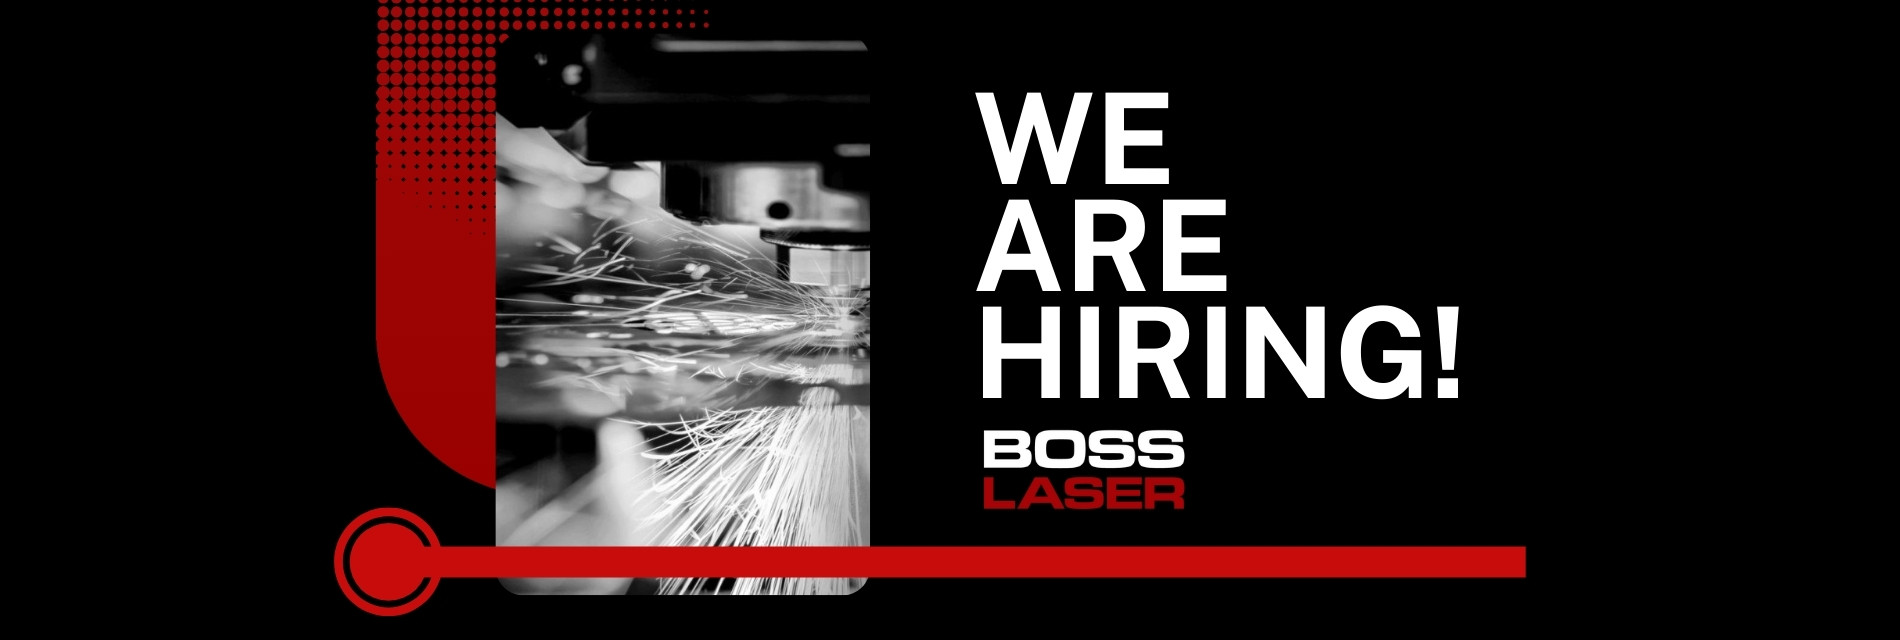 Boss Laser Careers